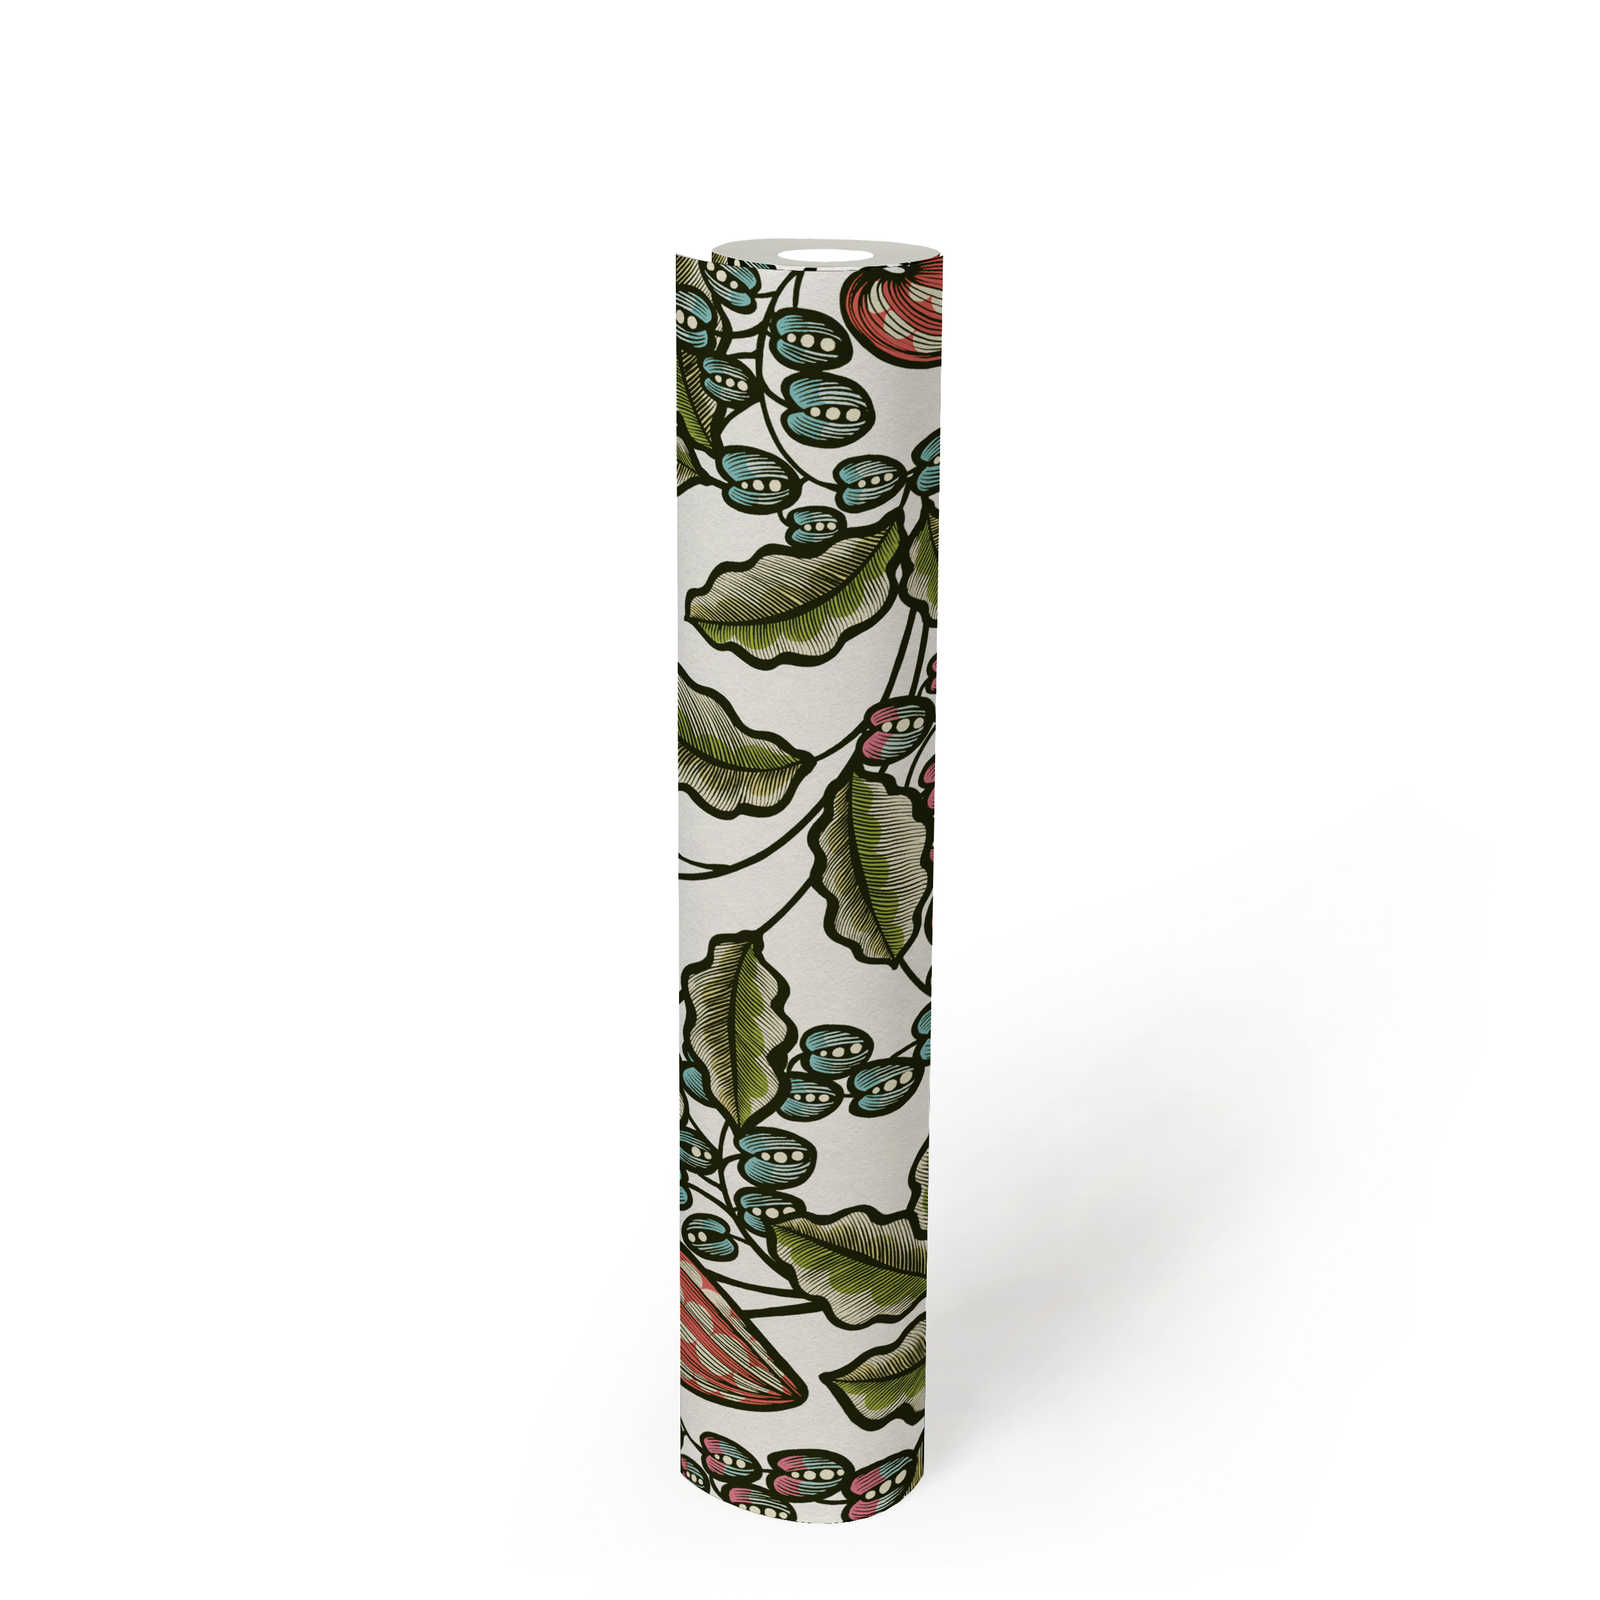             Carta da parati floreale design natura stampa scandinava - multicolore, verde, bianco
        